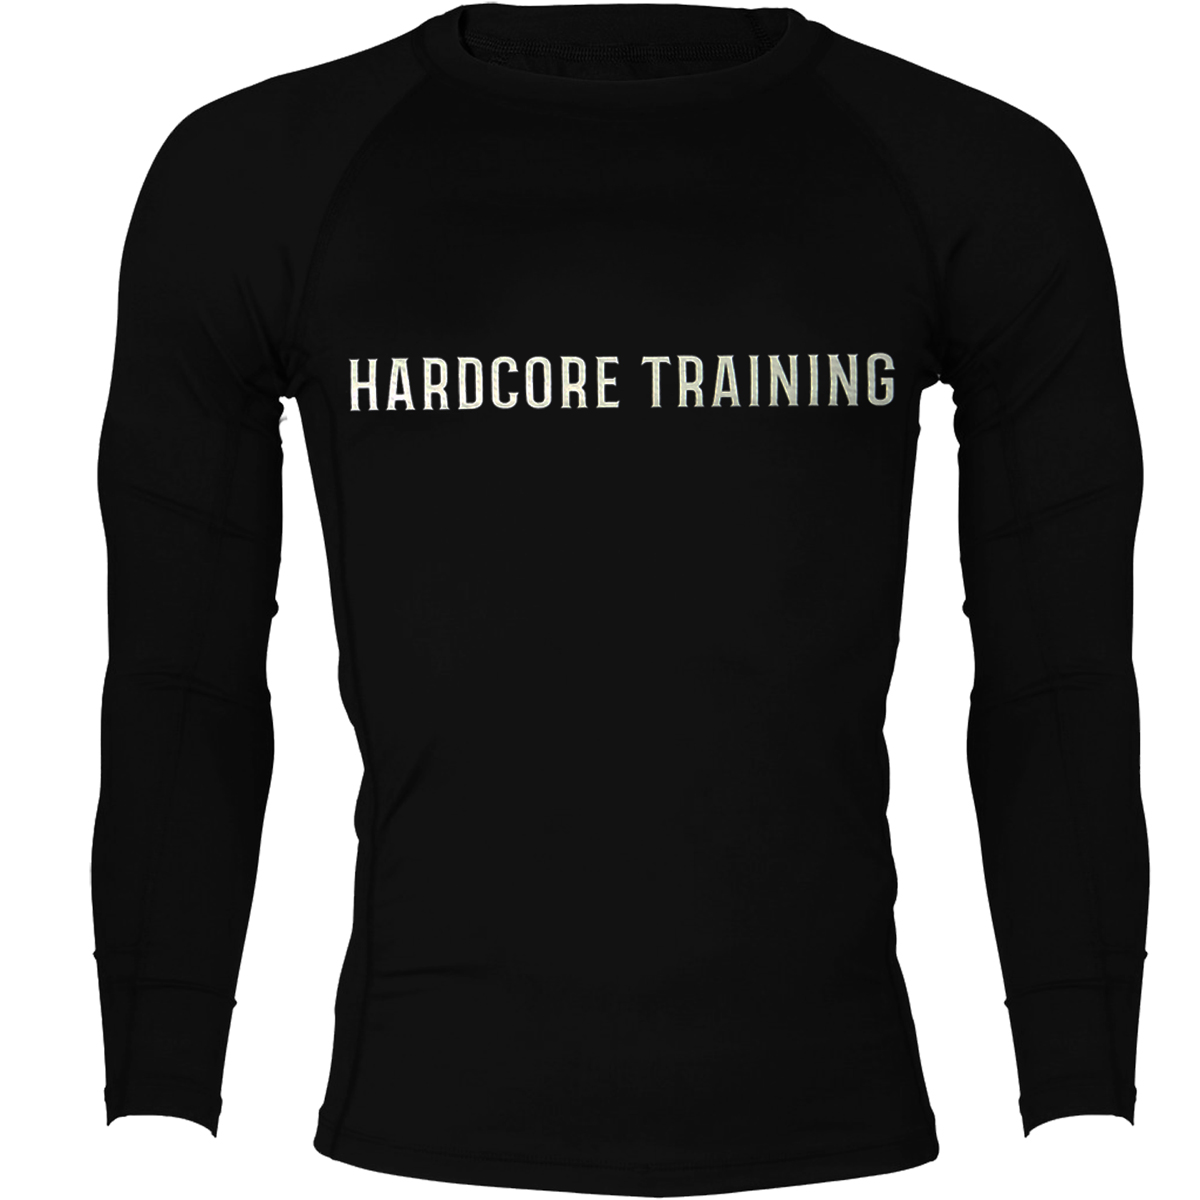 Рашгард мужской Hardcore Training Black, цвет: черный. hctrash0132. Размер S (48)